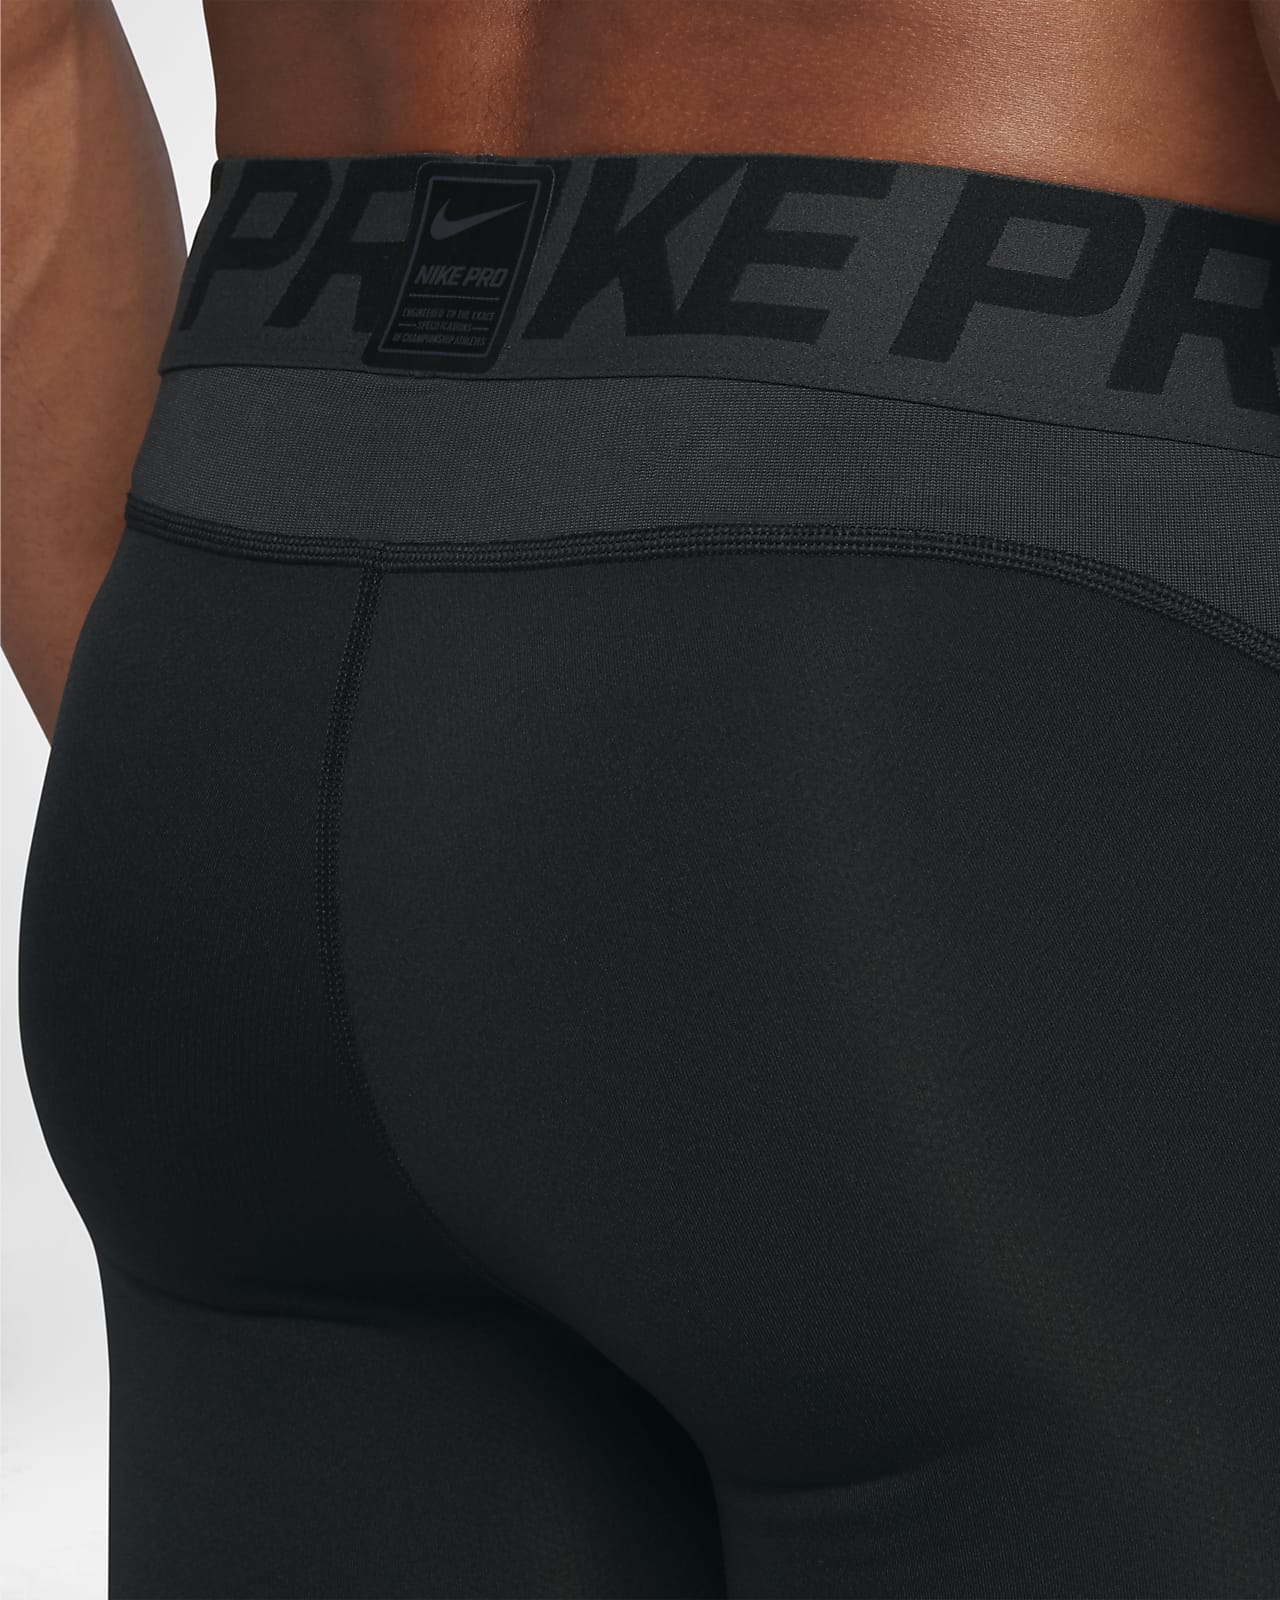 Nike Training Pro Hyperwarm Tights In Black 838016-010 - ShopperBoard